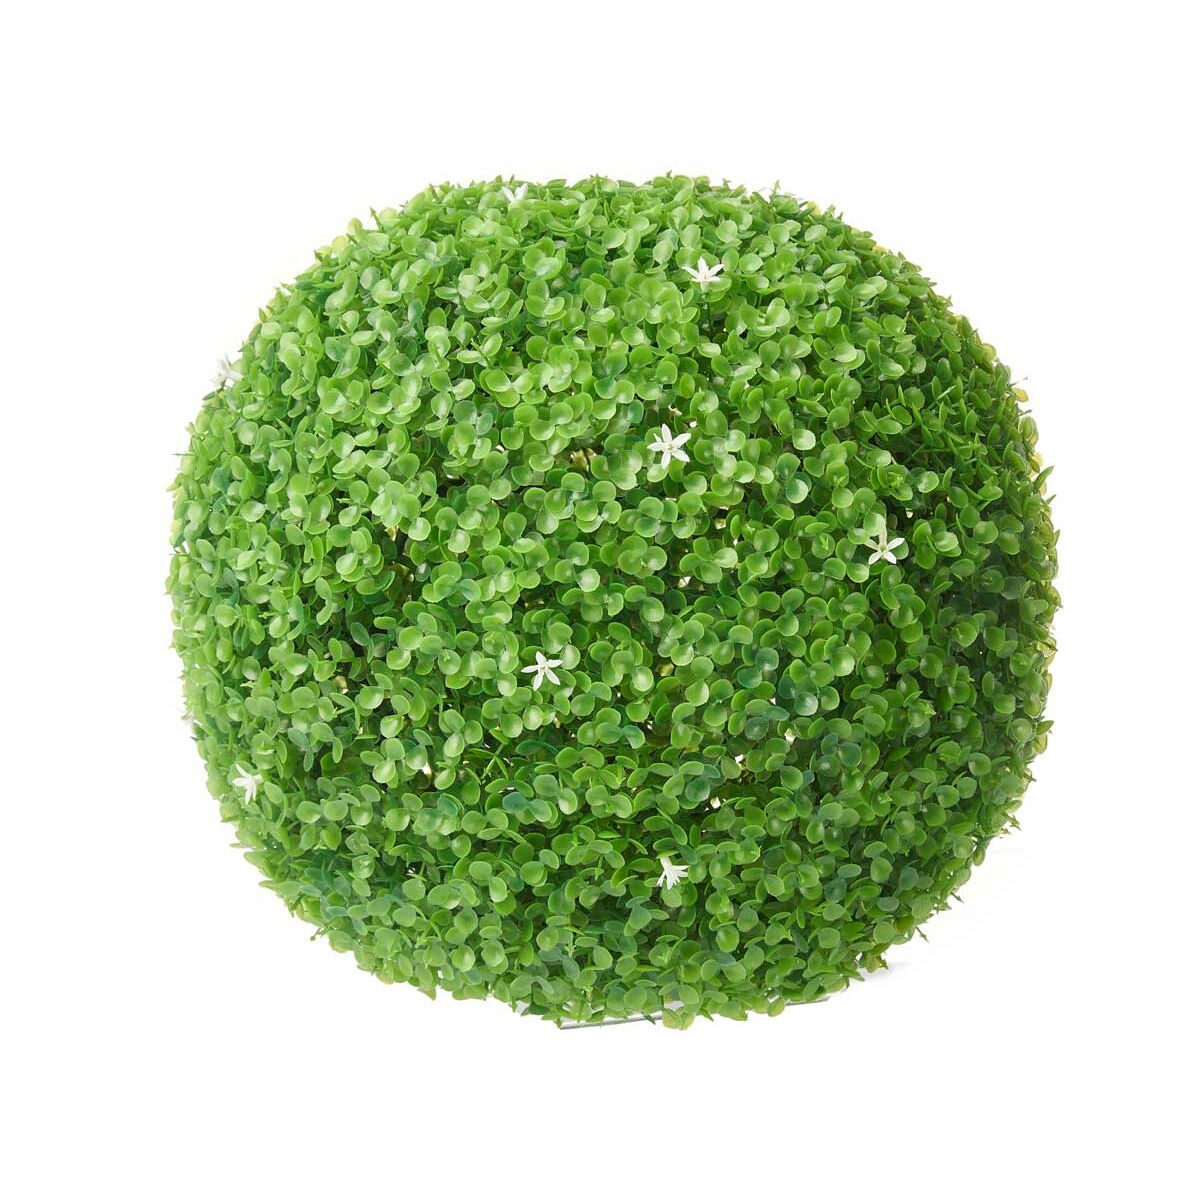 Decorative Plant Flowers Sheets Ball Plastic 37 x 37 x 37 cm (4 Units)